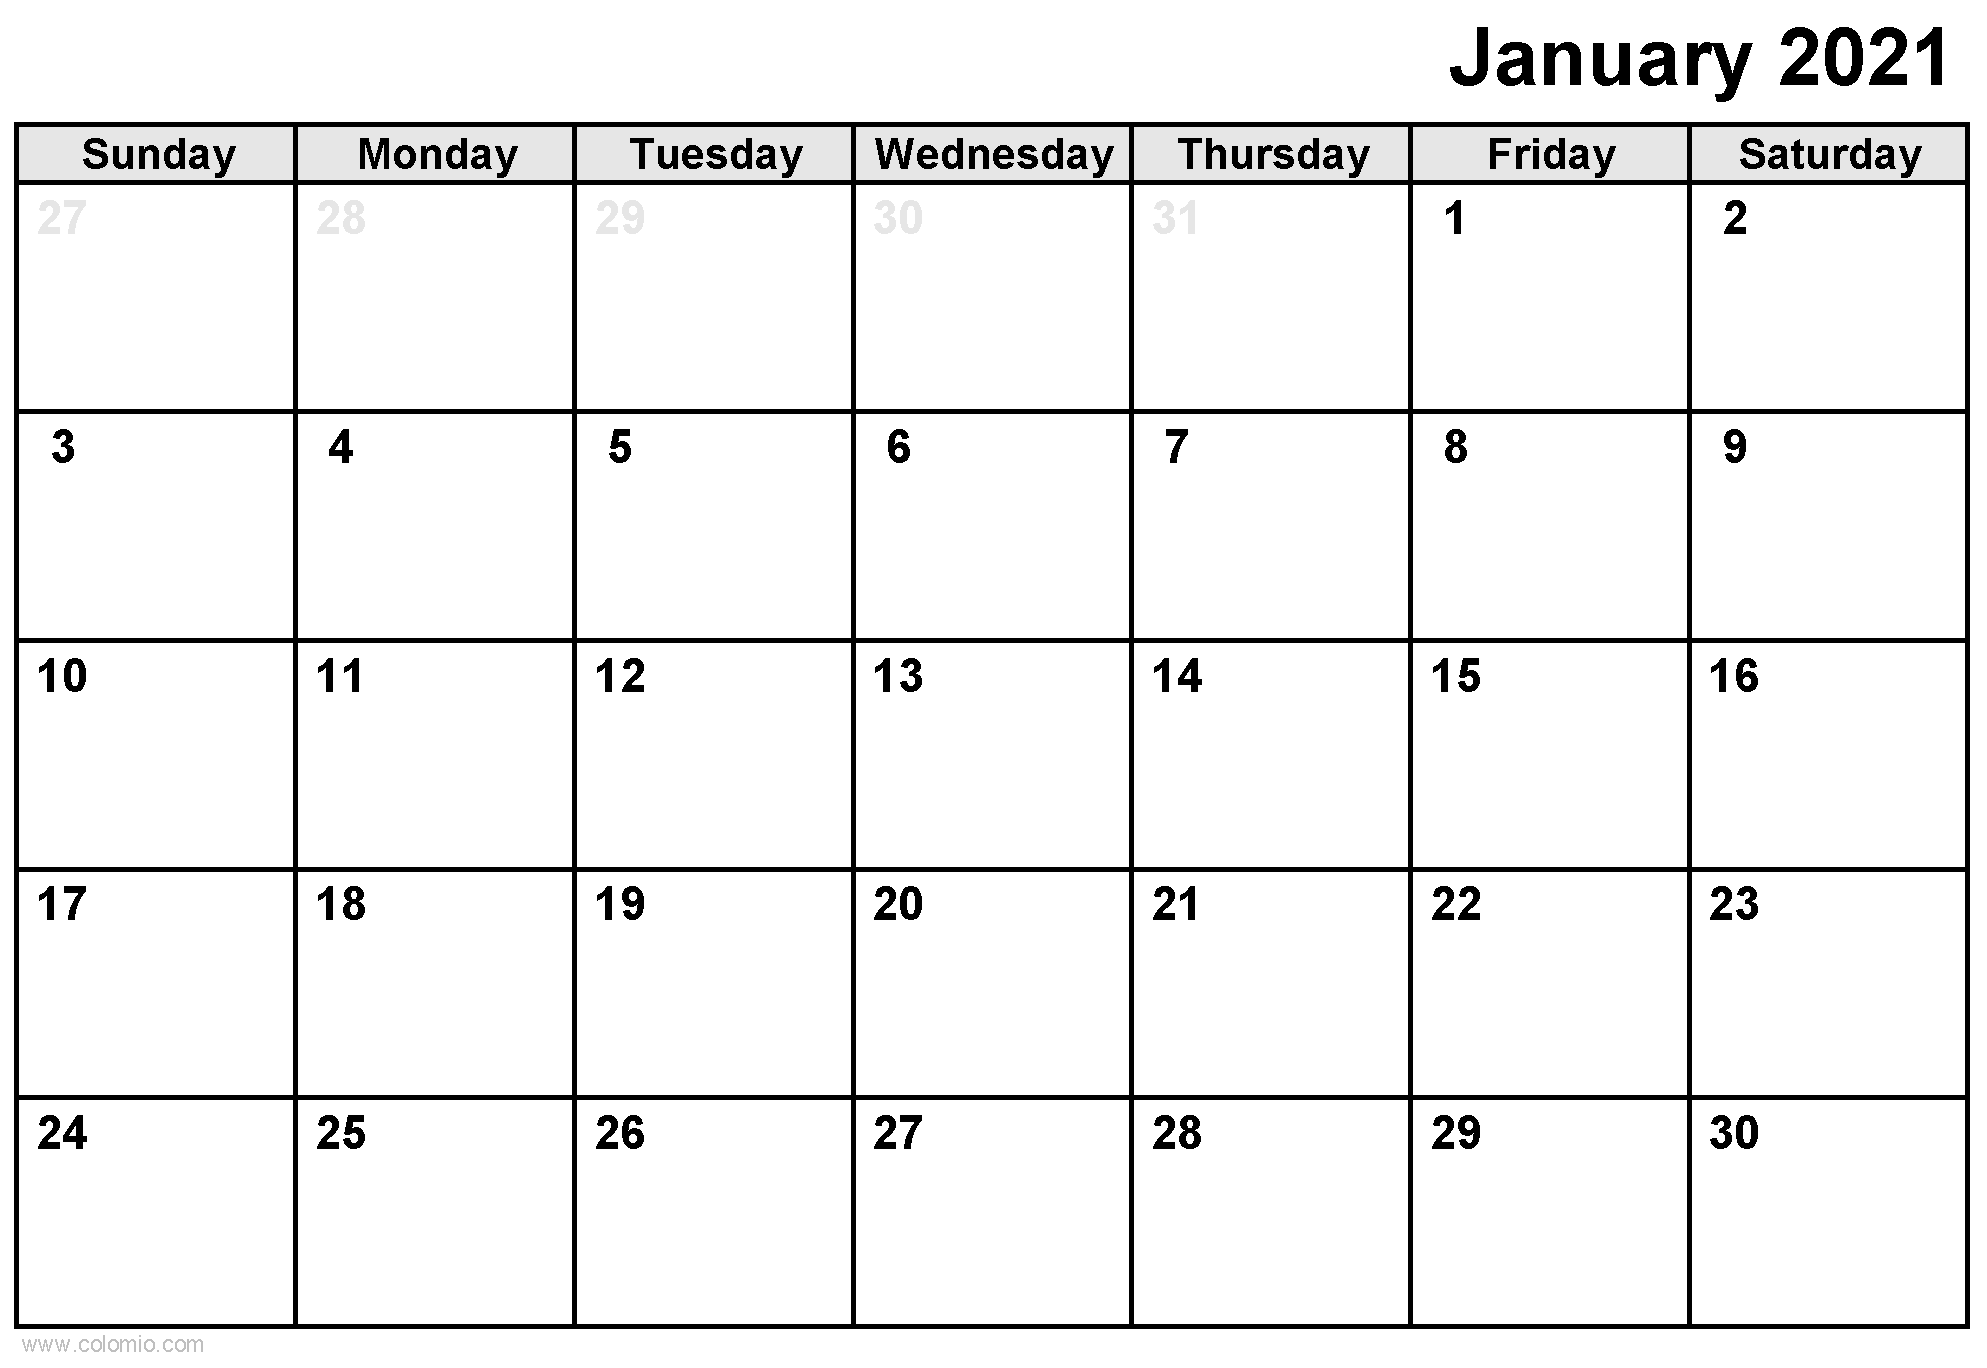 January 2021 Calendar printable